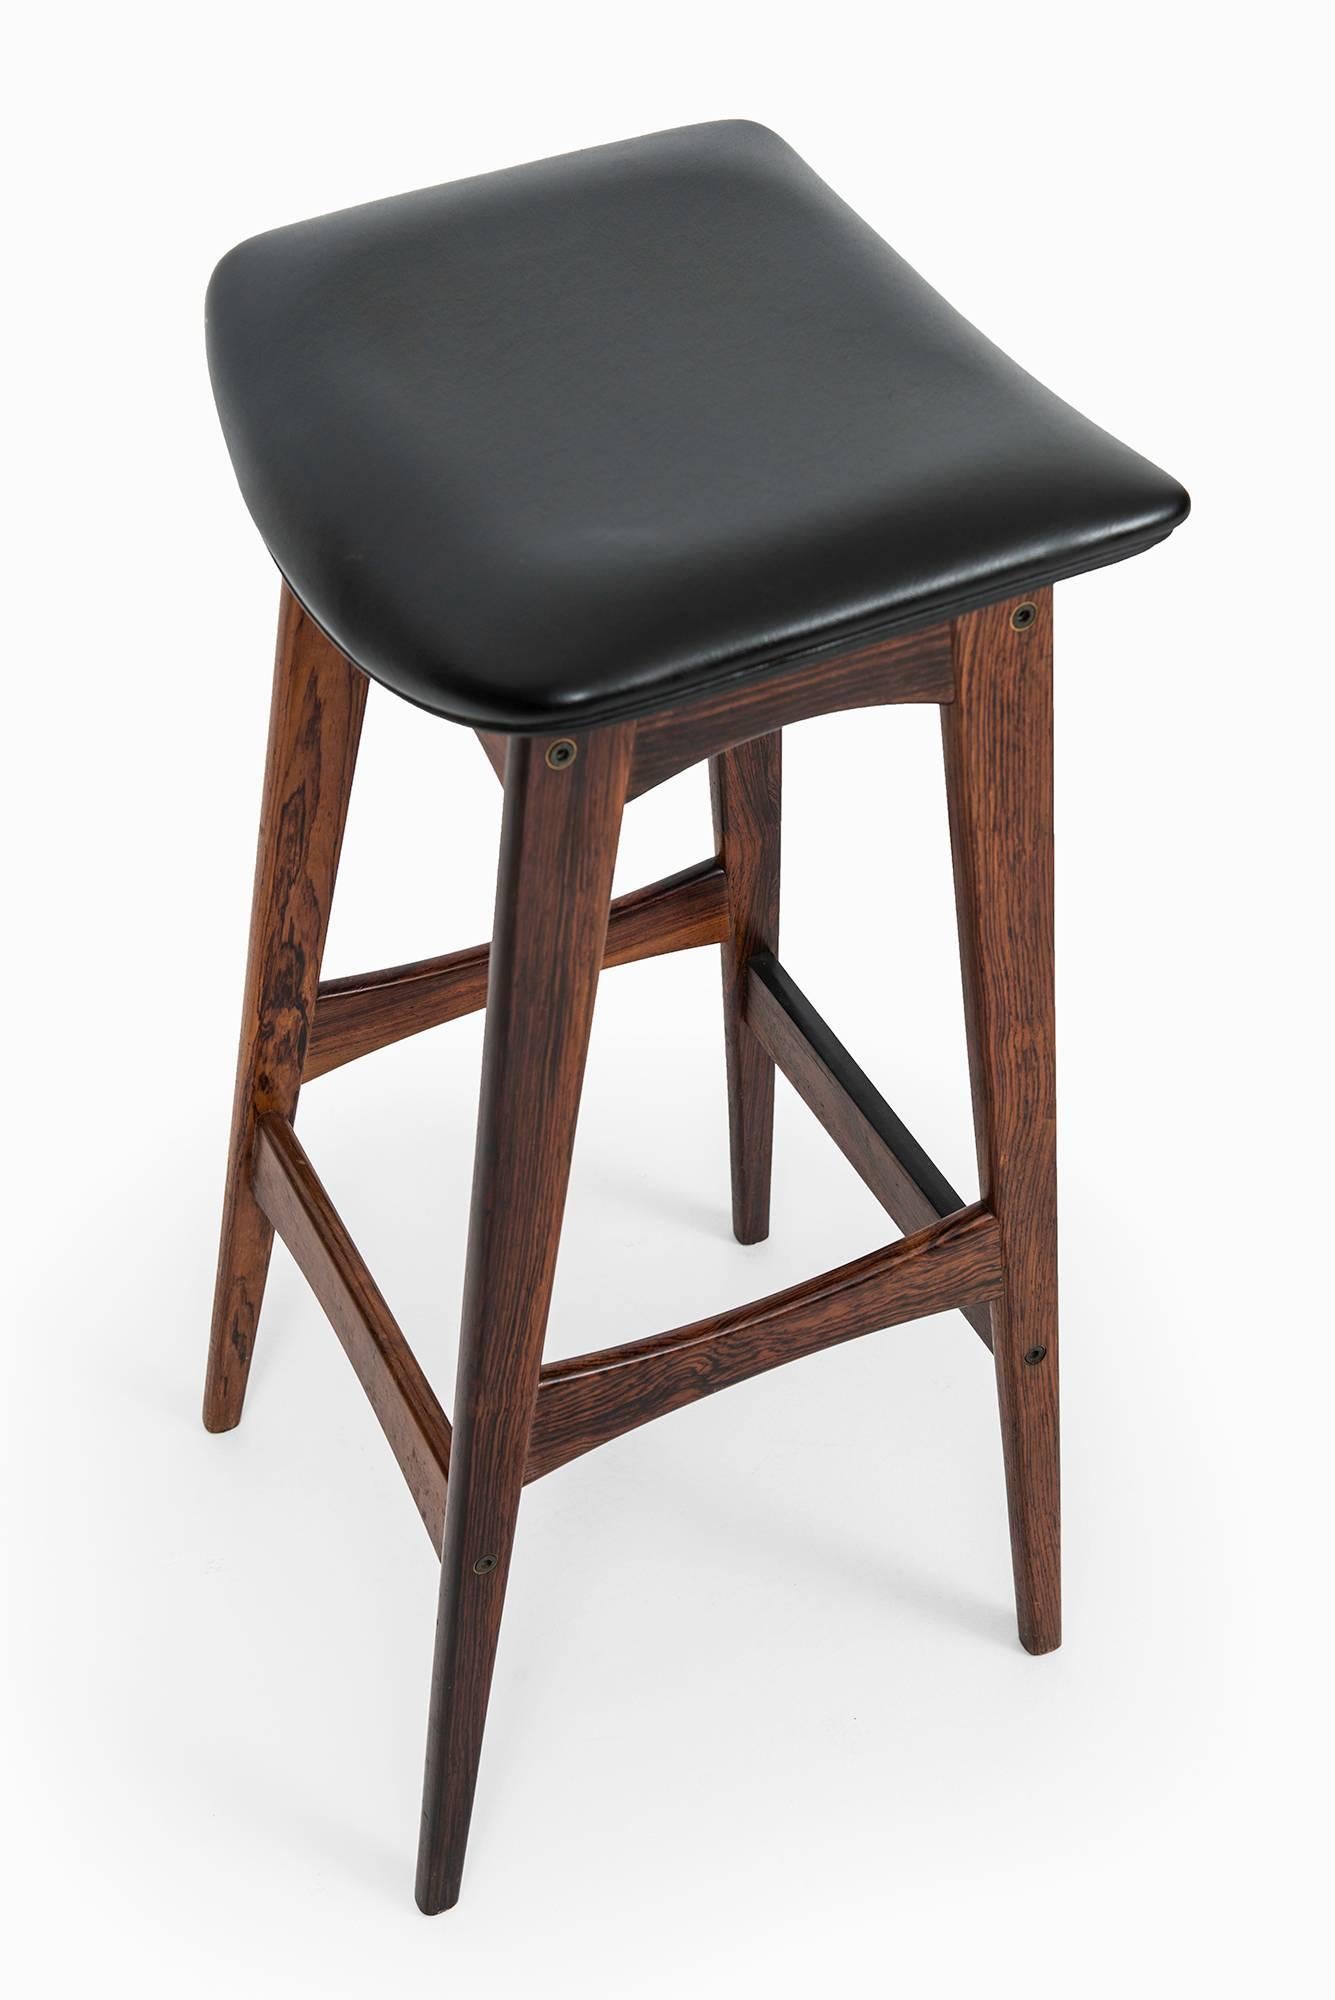 Rare set of four bar stools designed by Johannes Andersen. Produced by Brdr. Andersen in Denmark.